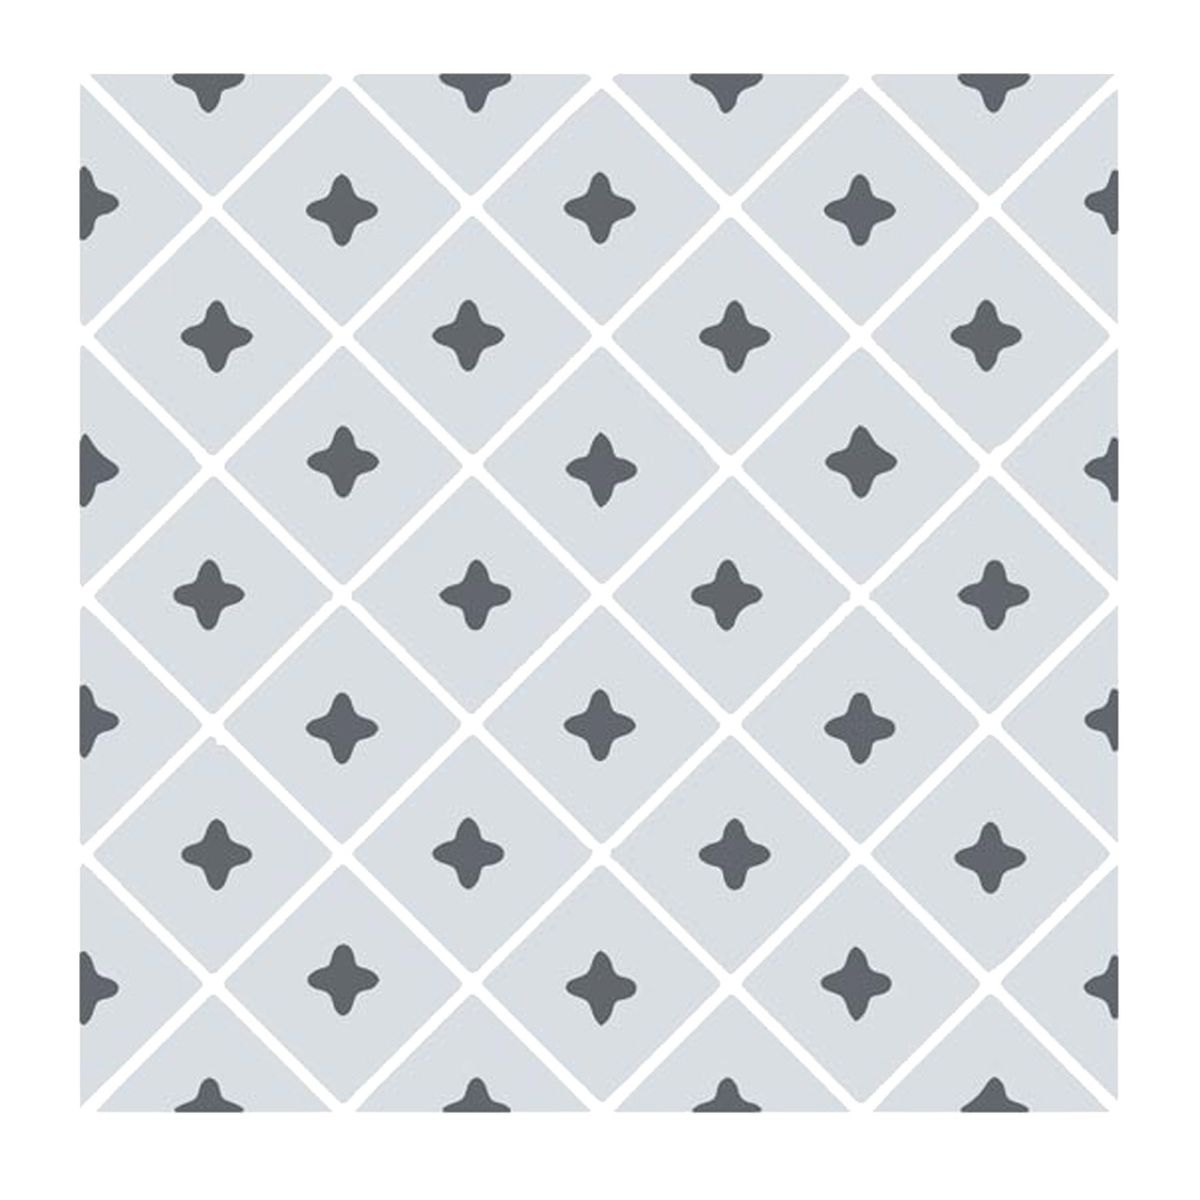 6 Cement tile stickers 15 x 15 cm - Gray